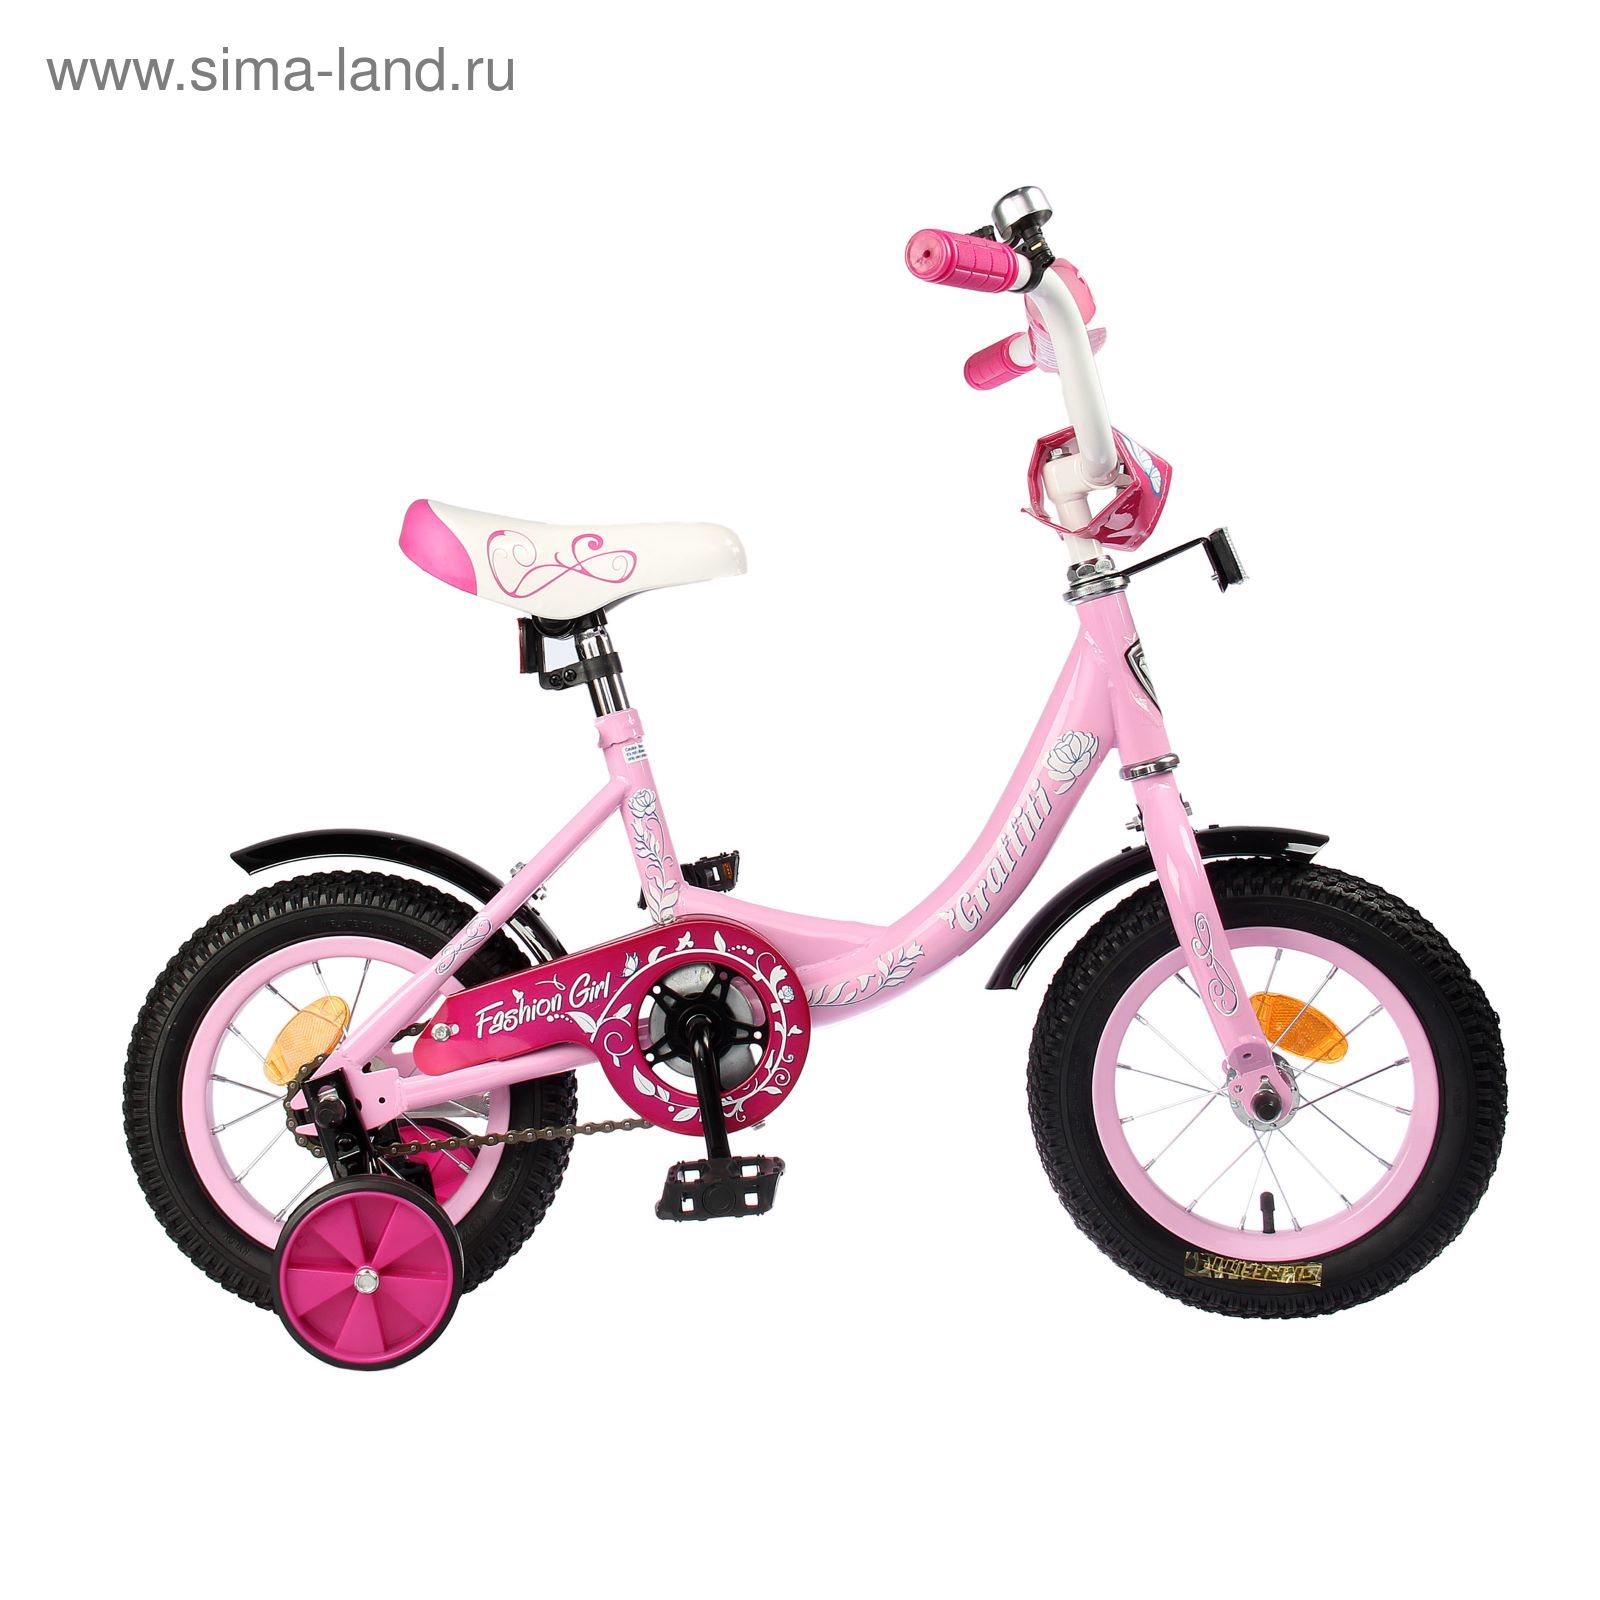 Велосипед 12" GRAFFITI Fashion Girl RUS, 2017, цвет розовый